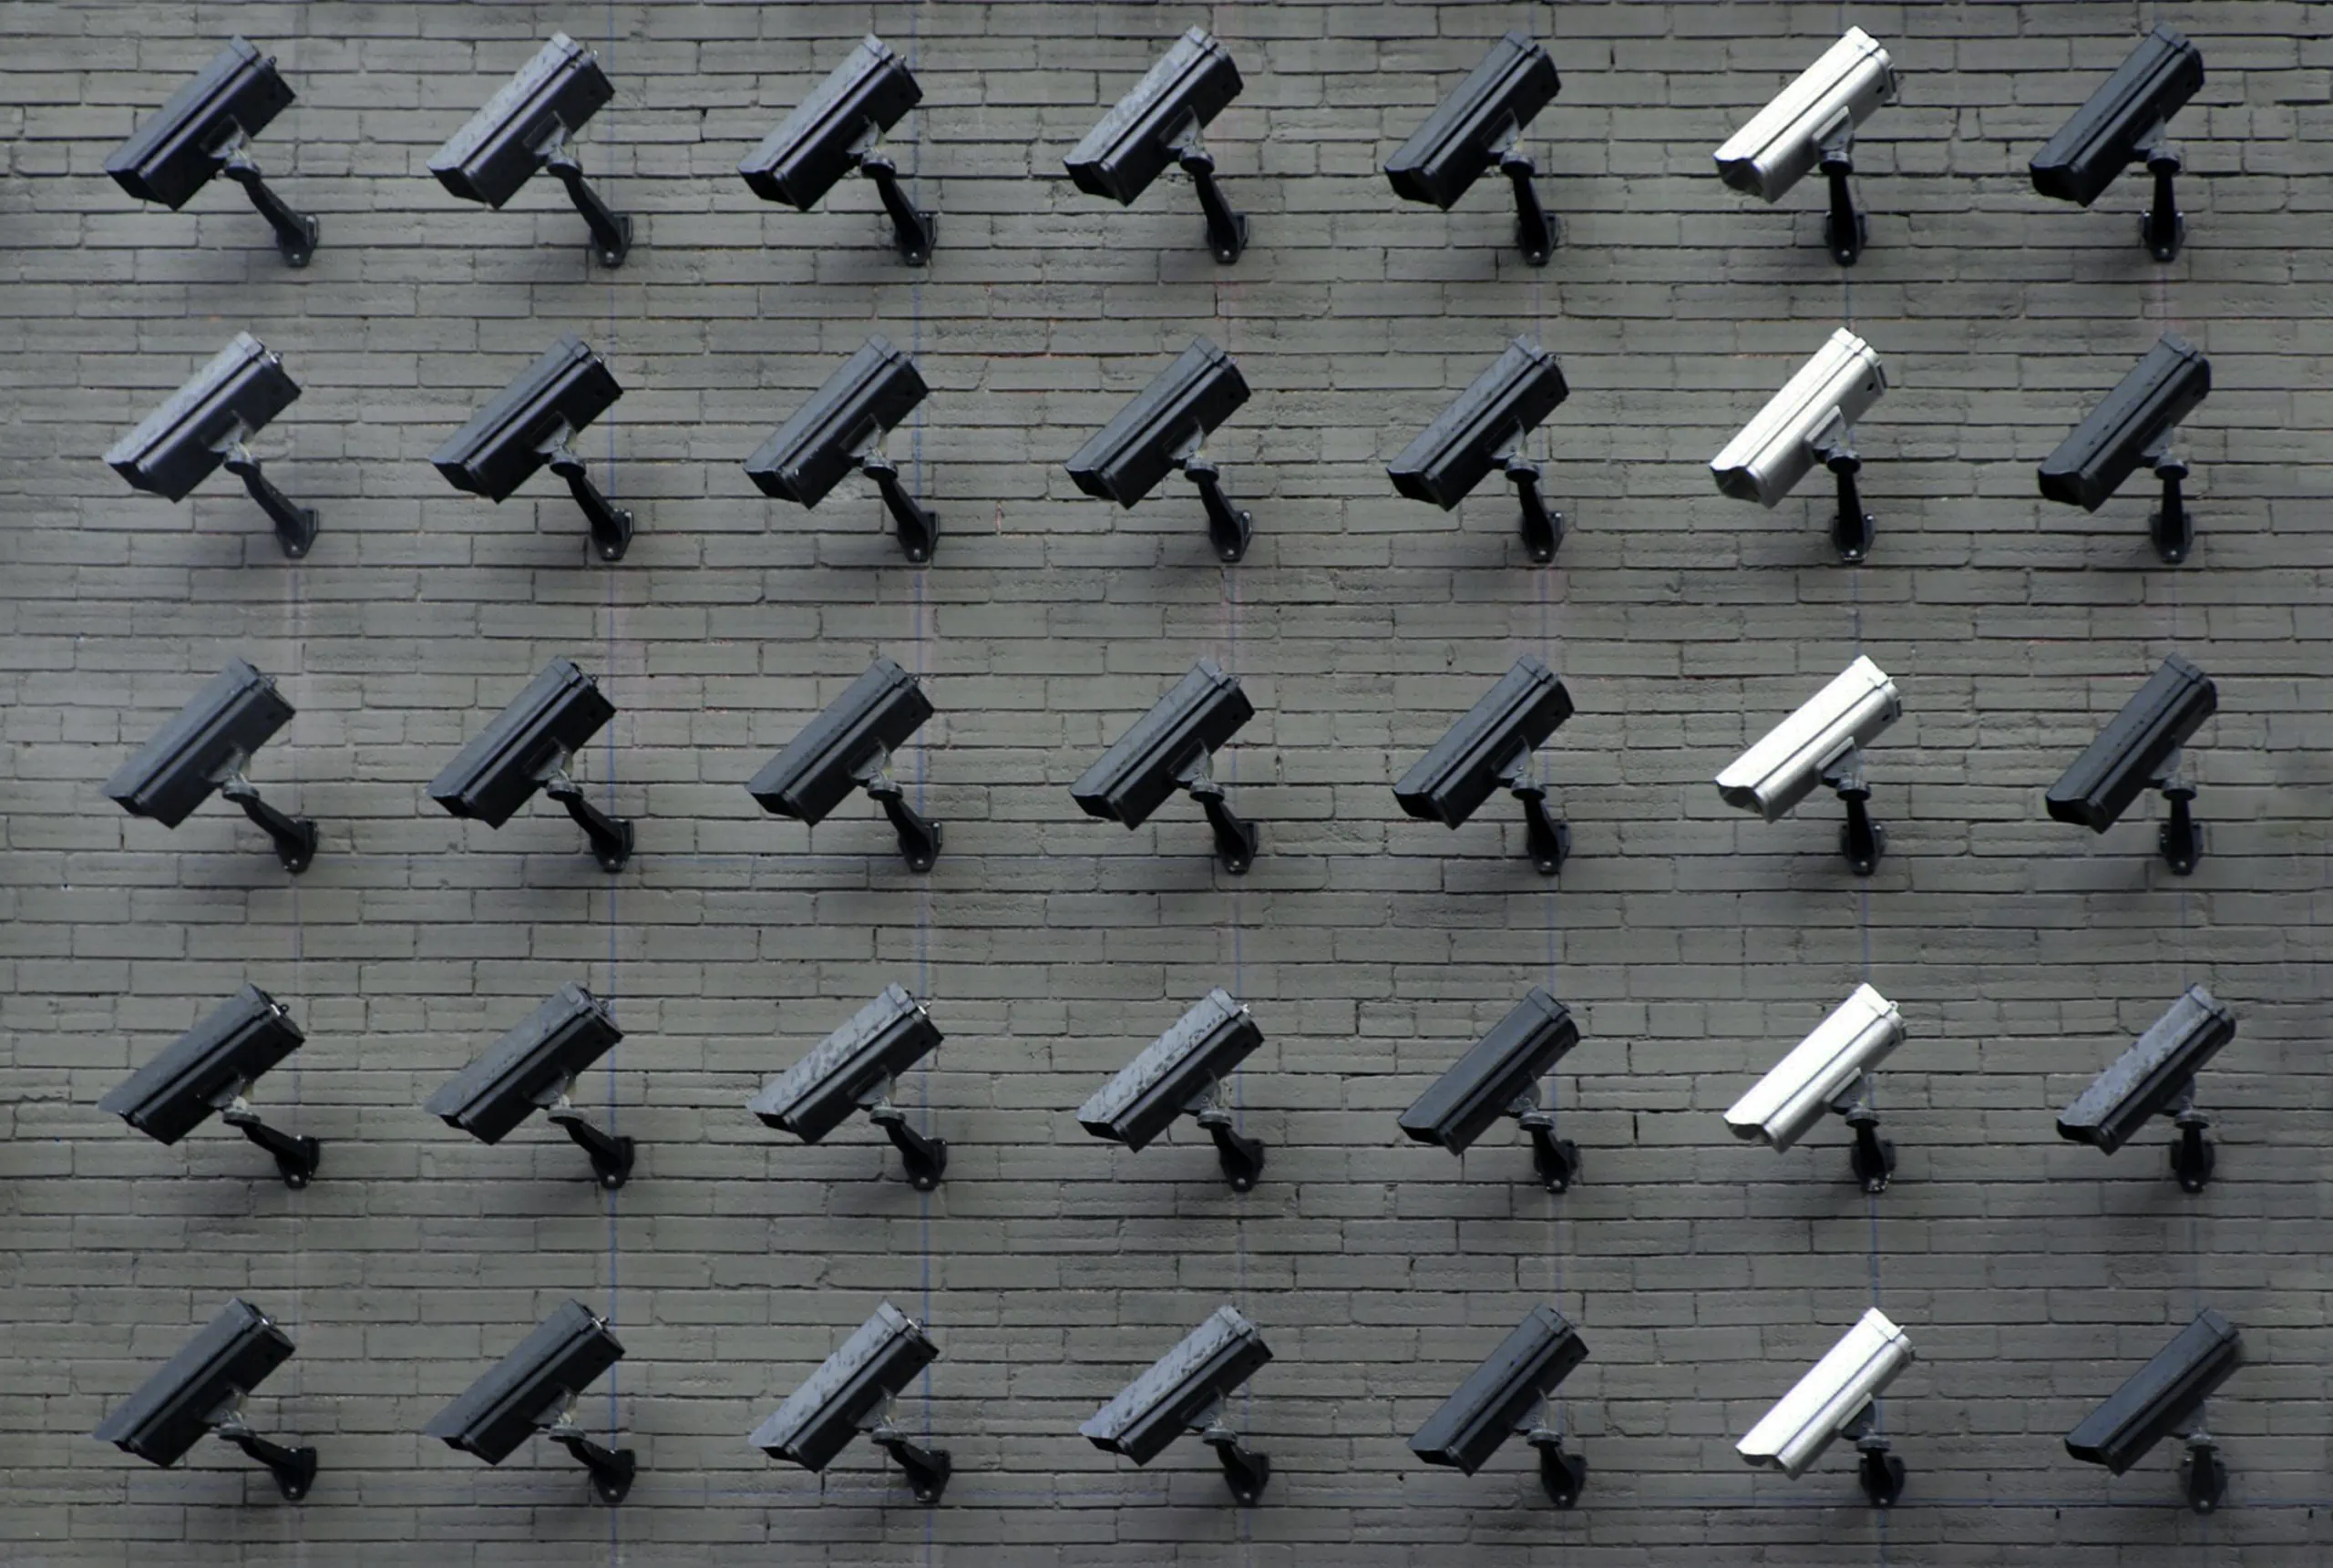 Old CCTV cameras that lack surveillance capabilities 